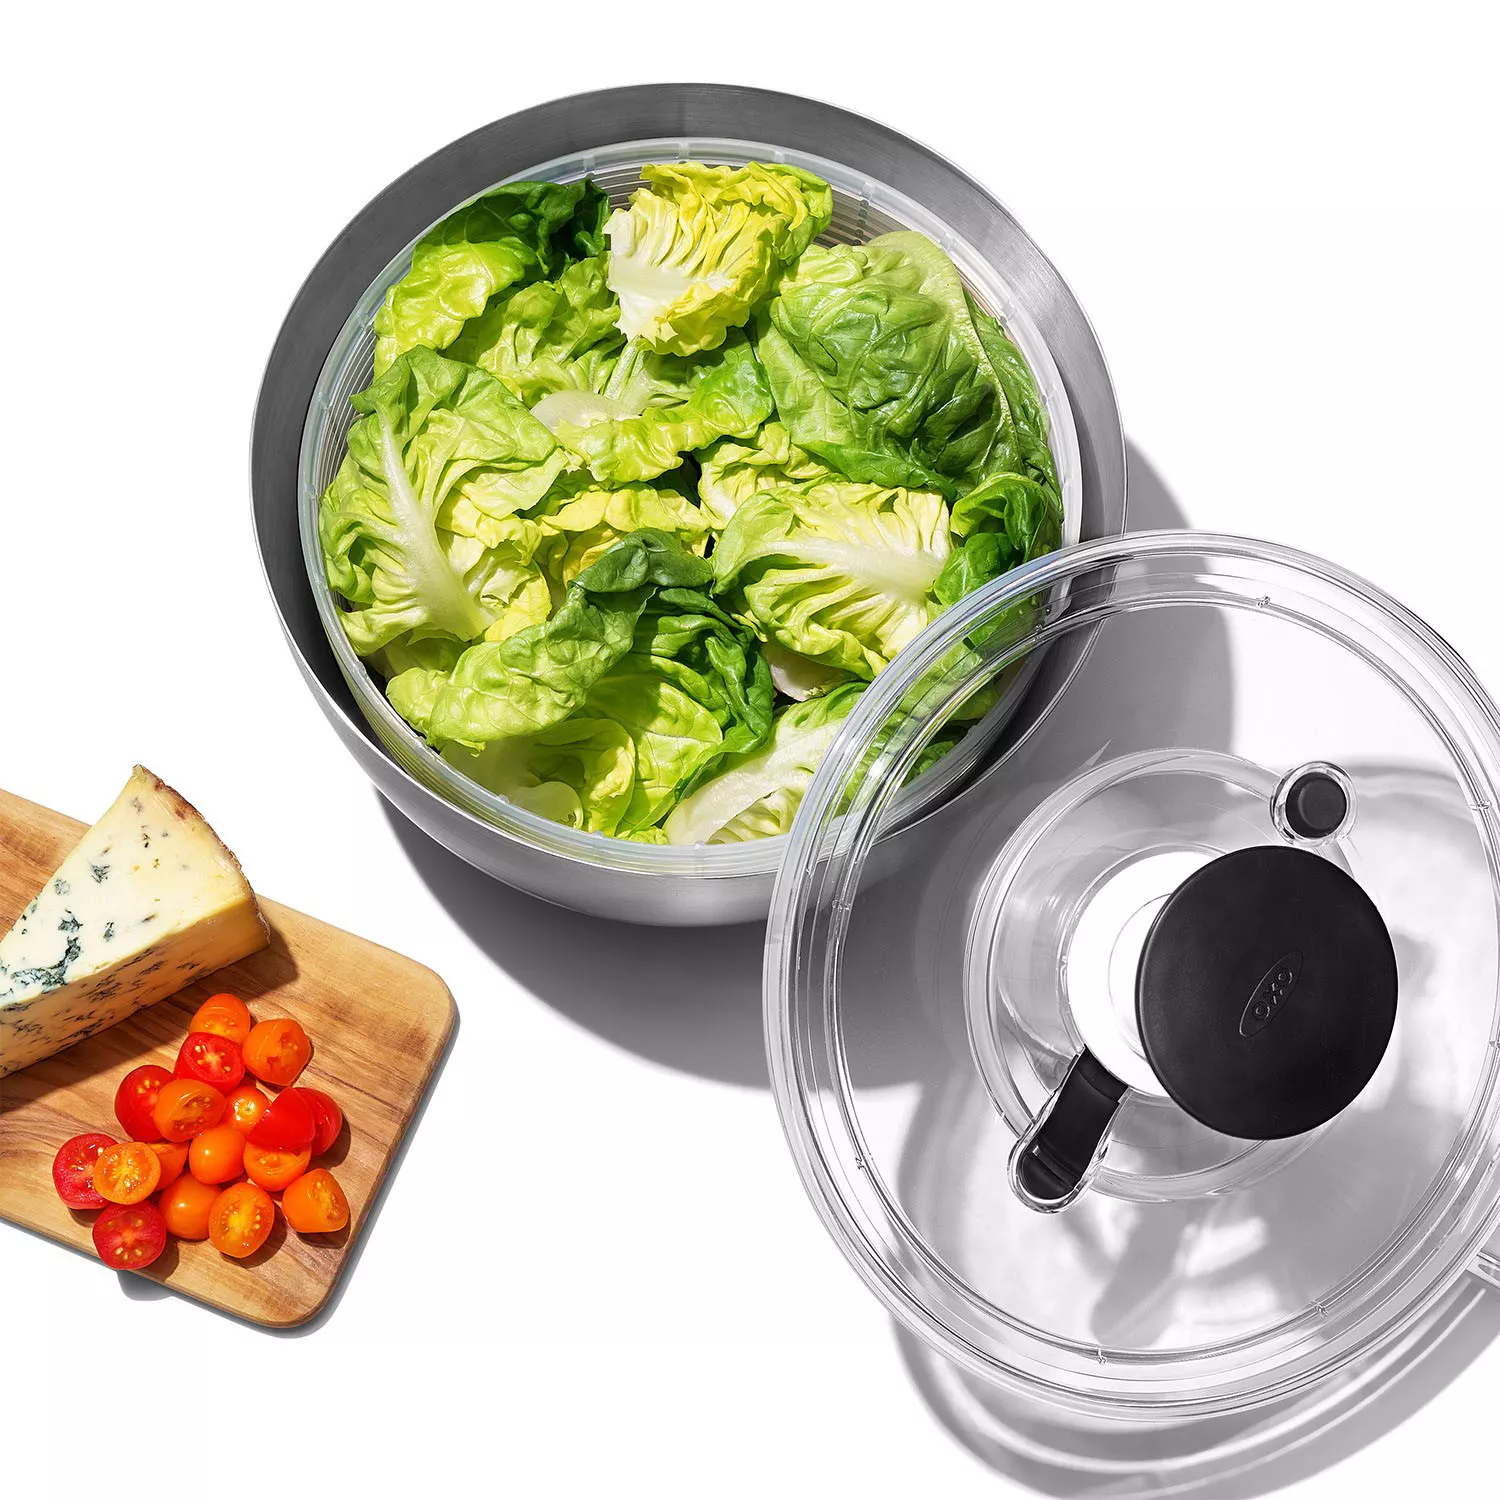 OXO Stainless Steel Salad Spinner